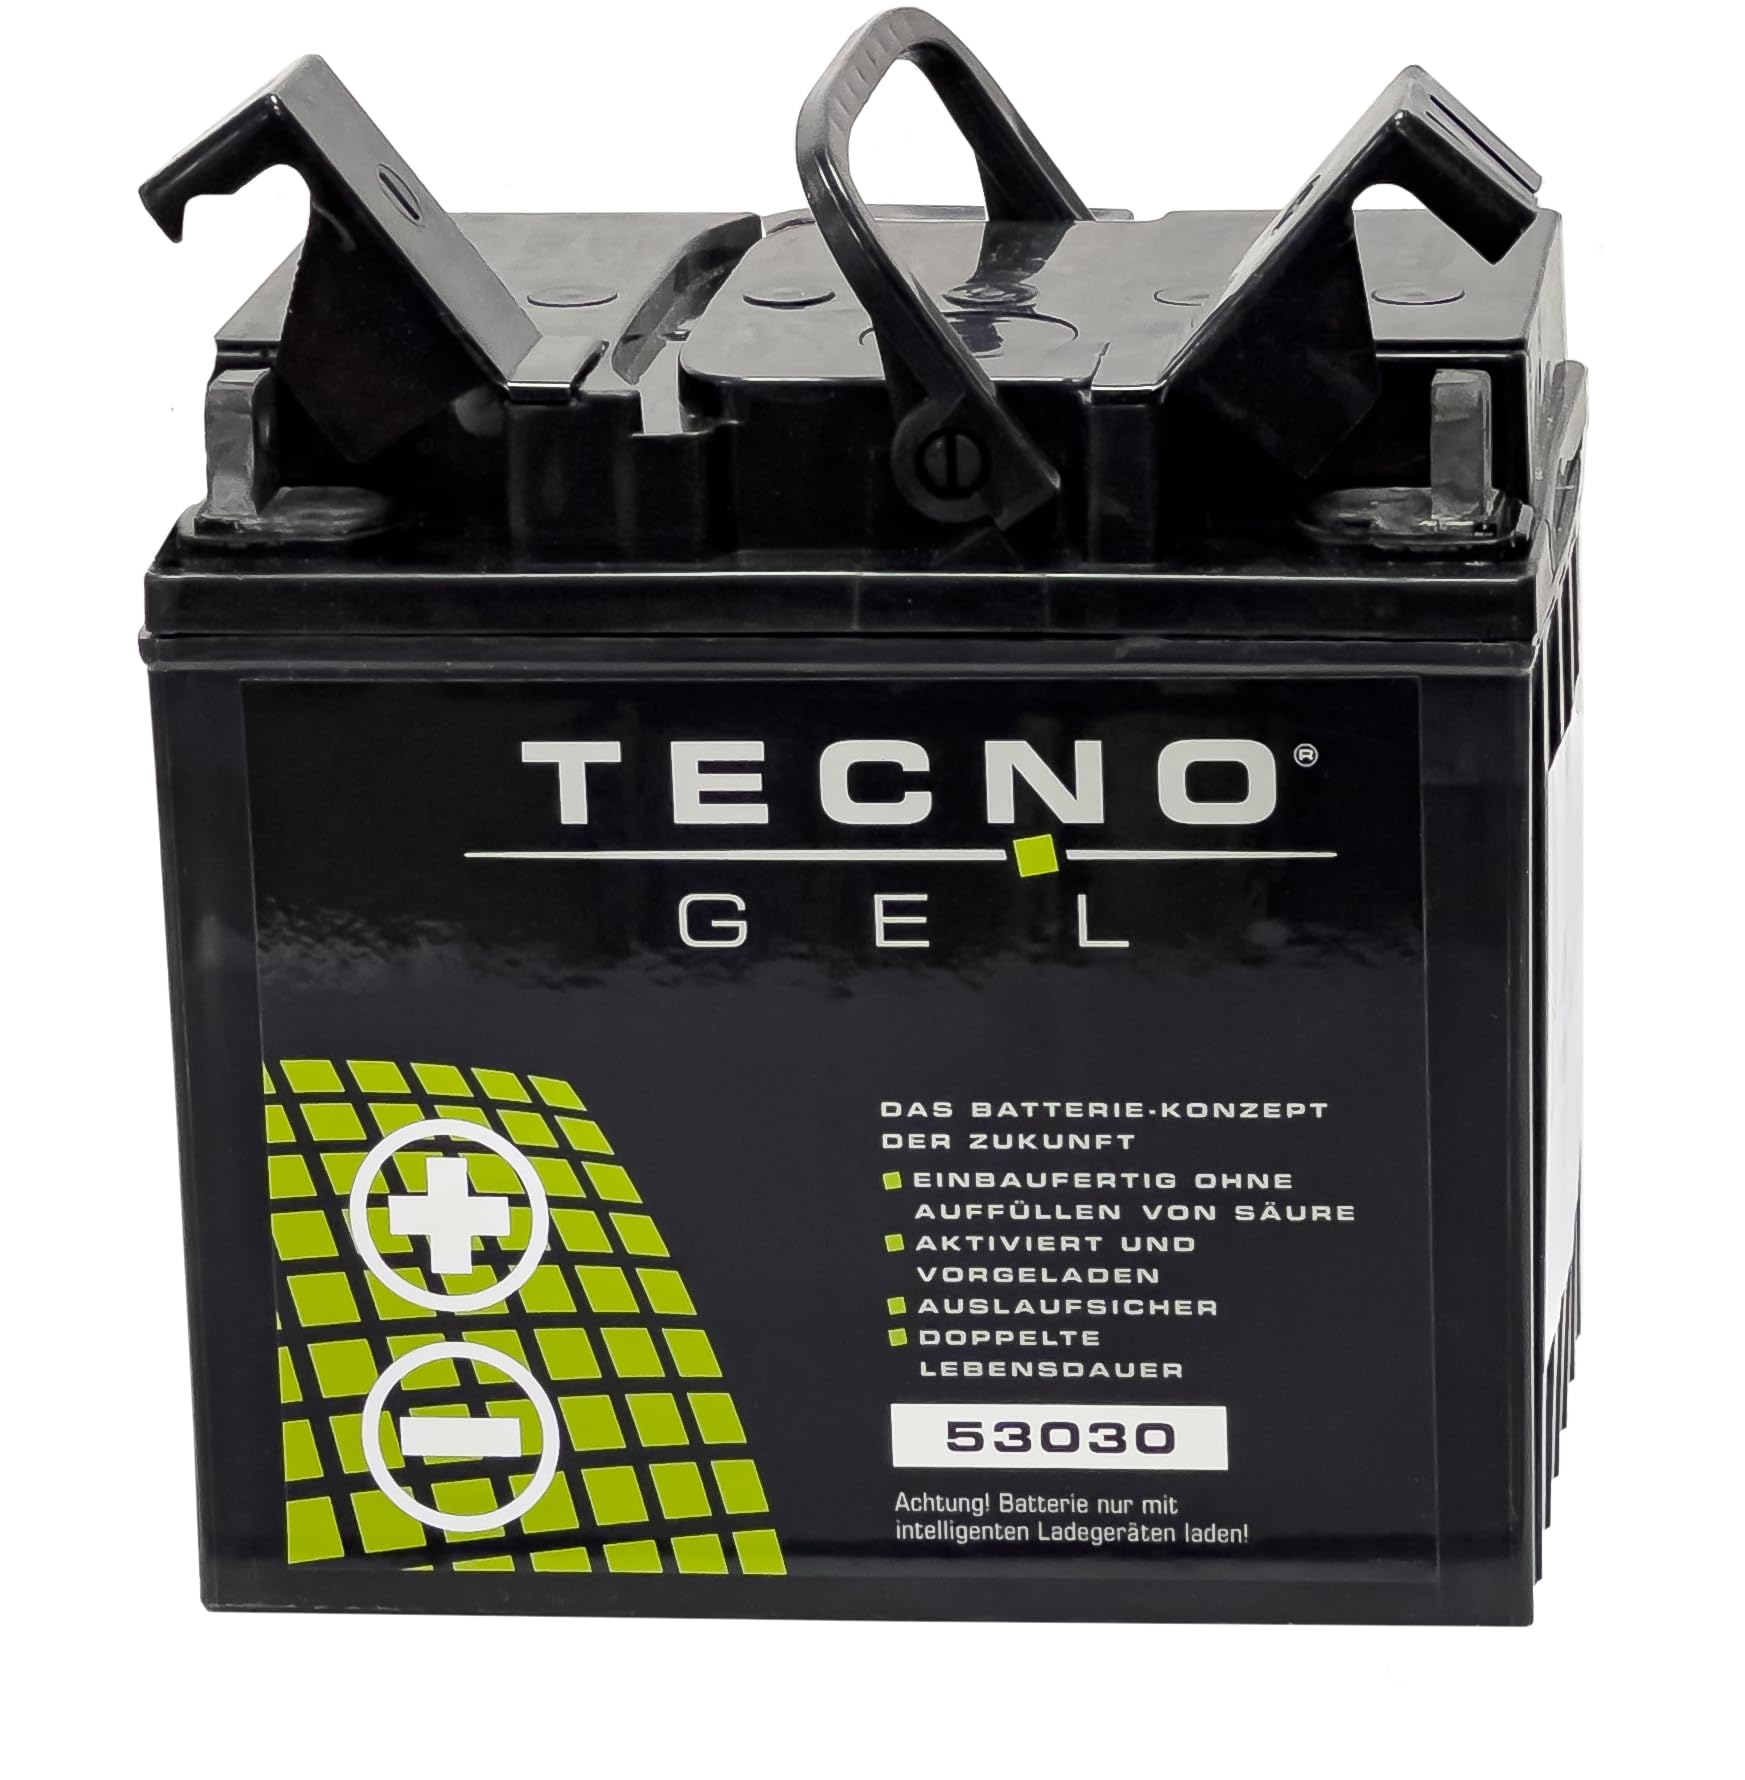 TECNO-GEL Motorrad Qualitäts Batterie 53030 (Y60N30-L) für BMW K 100, 2, RS, RT, LT, 16V, m/o ABS 1982-1996, 12V Gel-Batterie 30 Ah, 187x130x170 mm von Wirth-Federn